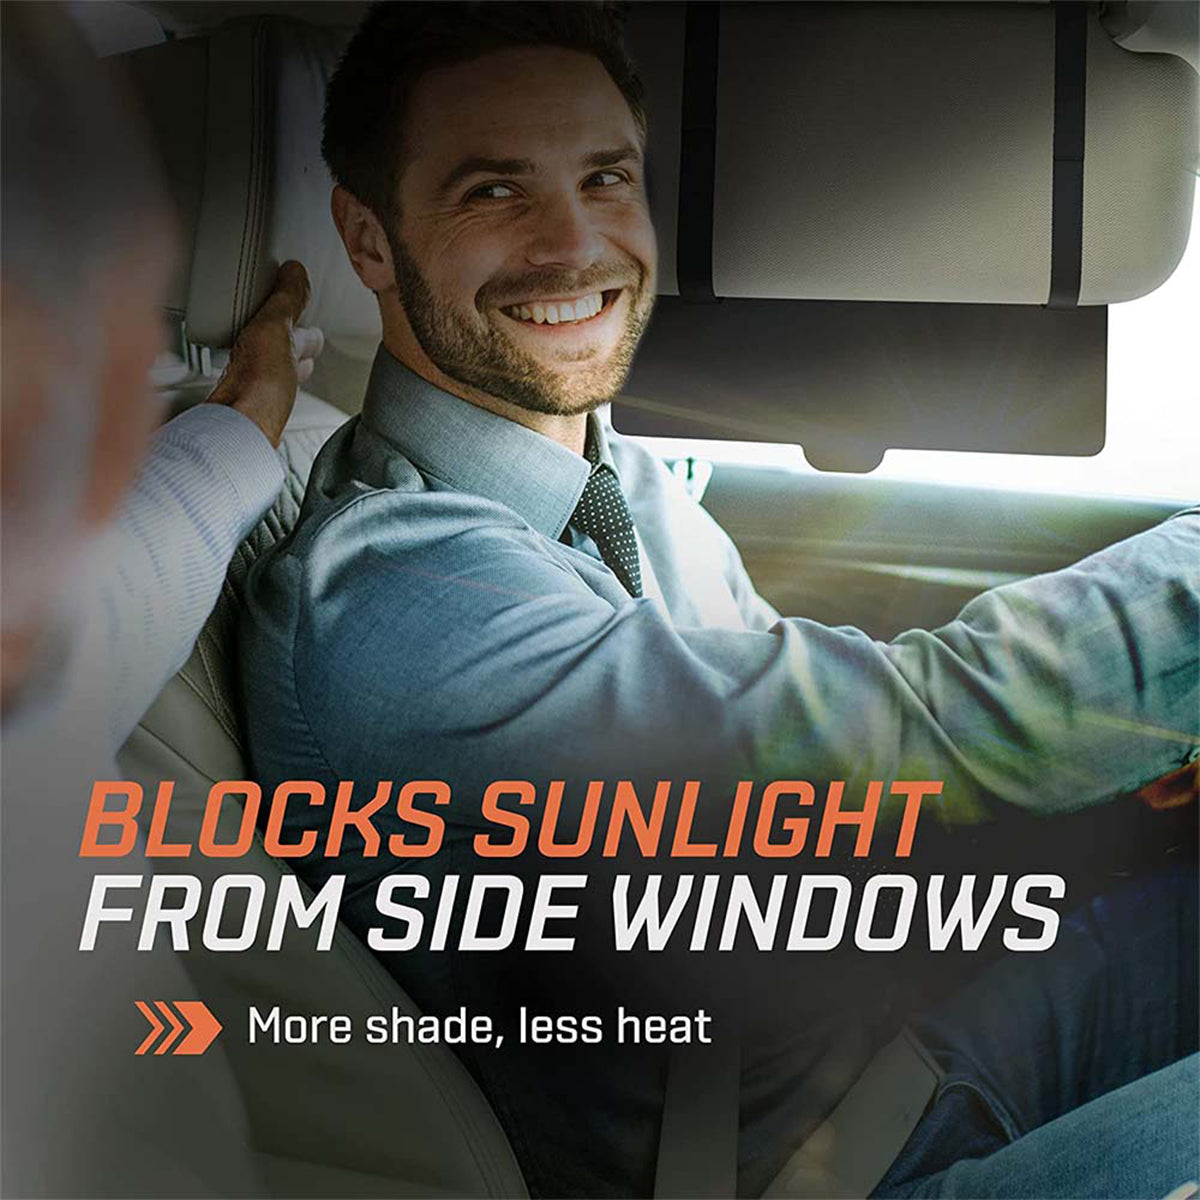 Polarized Sun Visor Sunshade Extender for Car with Polycarbonate Lens, Custom fit for Car, Anti-Glare Car Sun Visor Protects from Sun Glare WAKO255